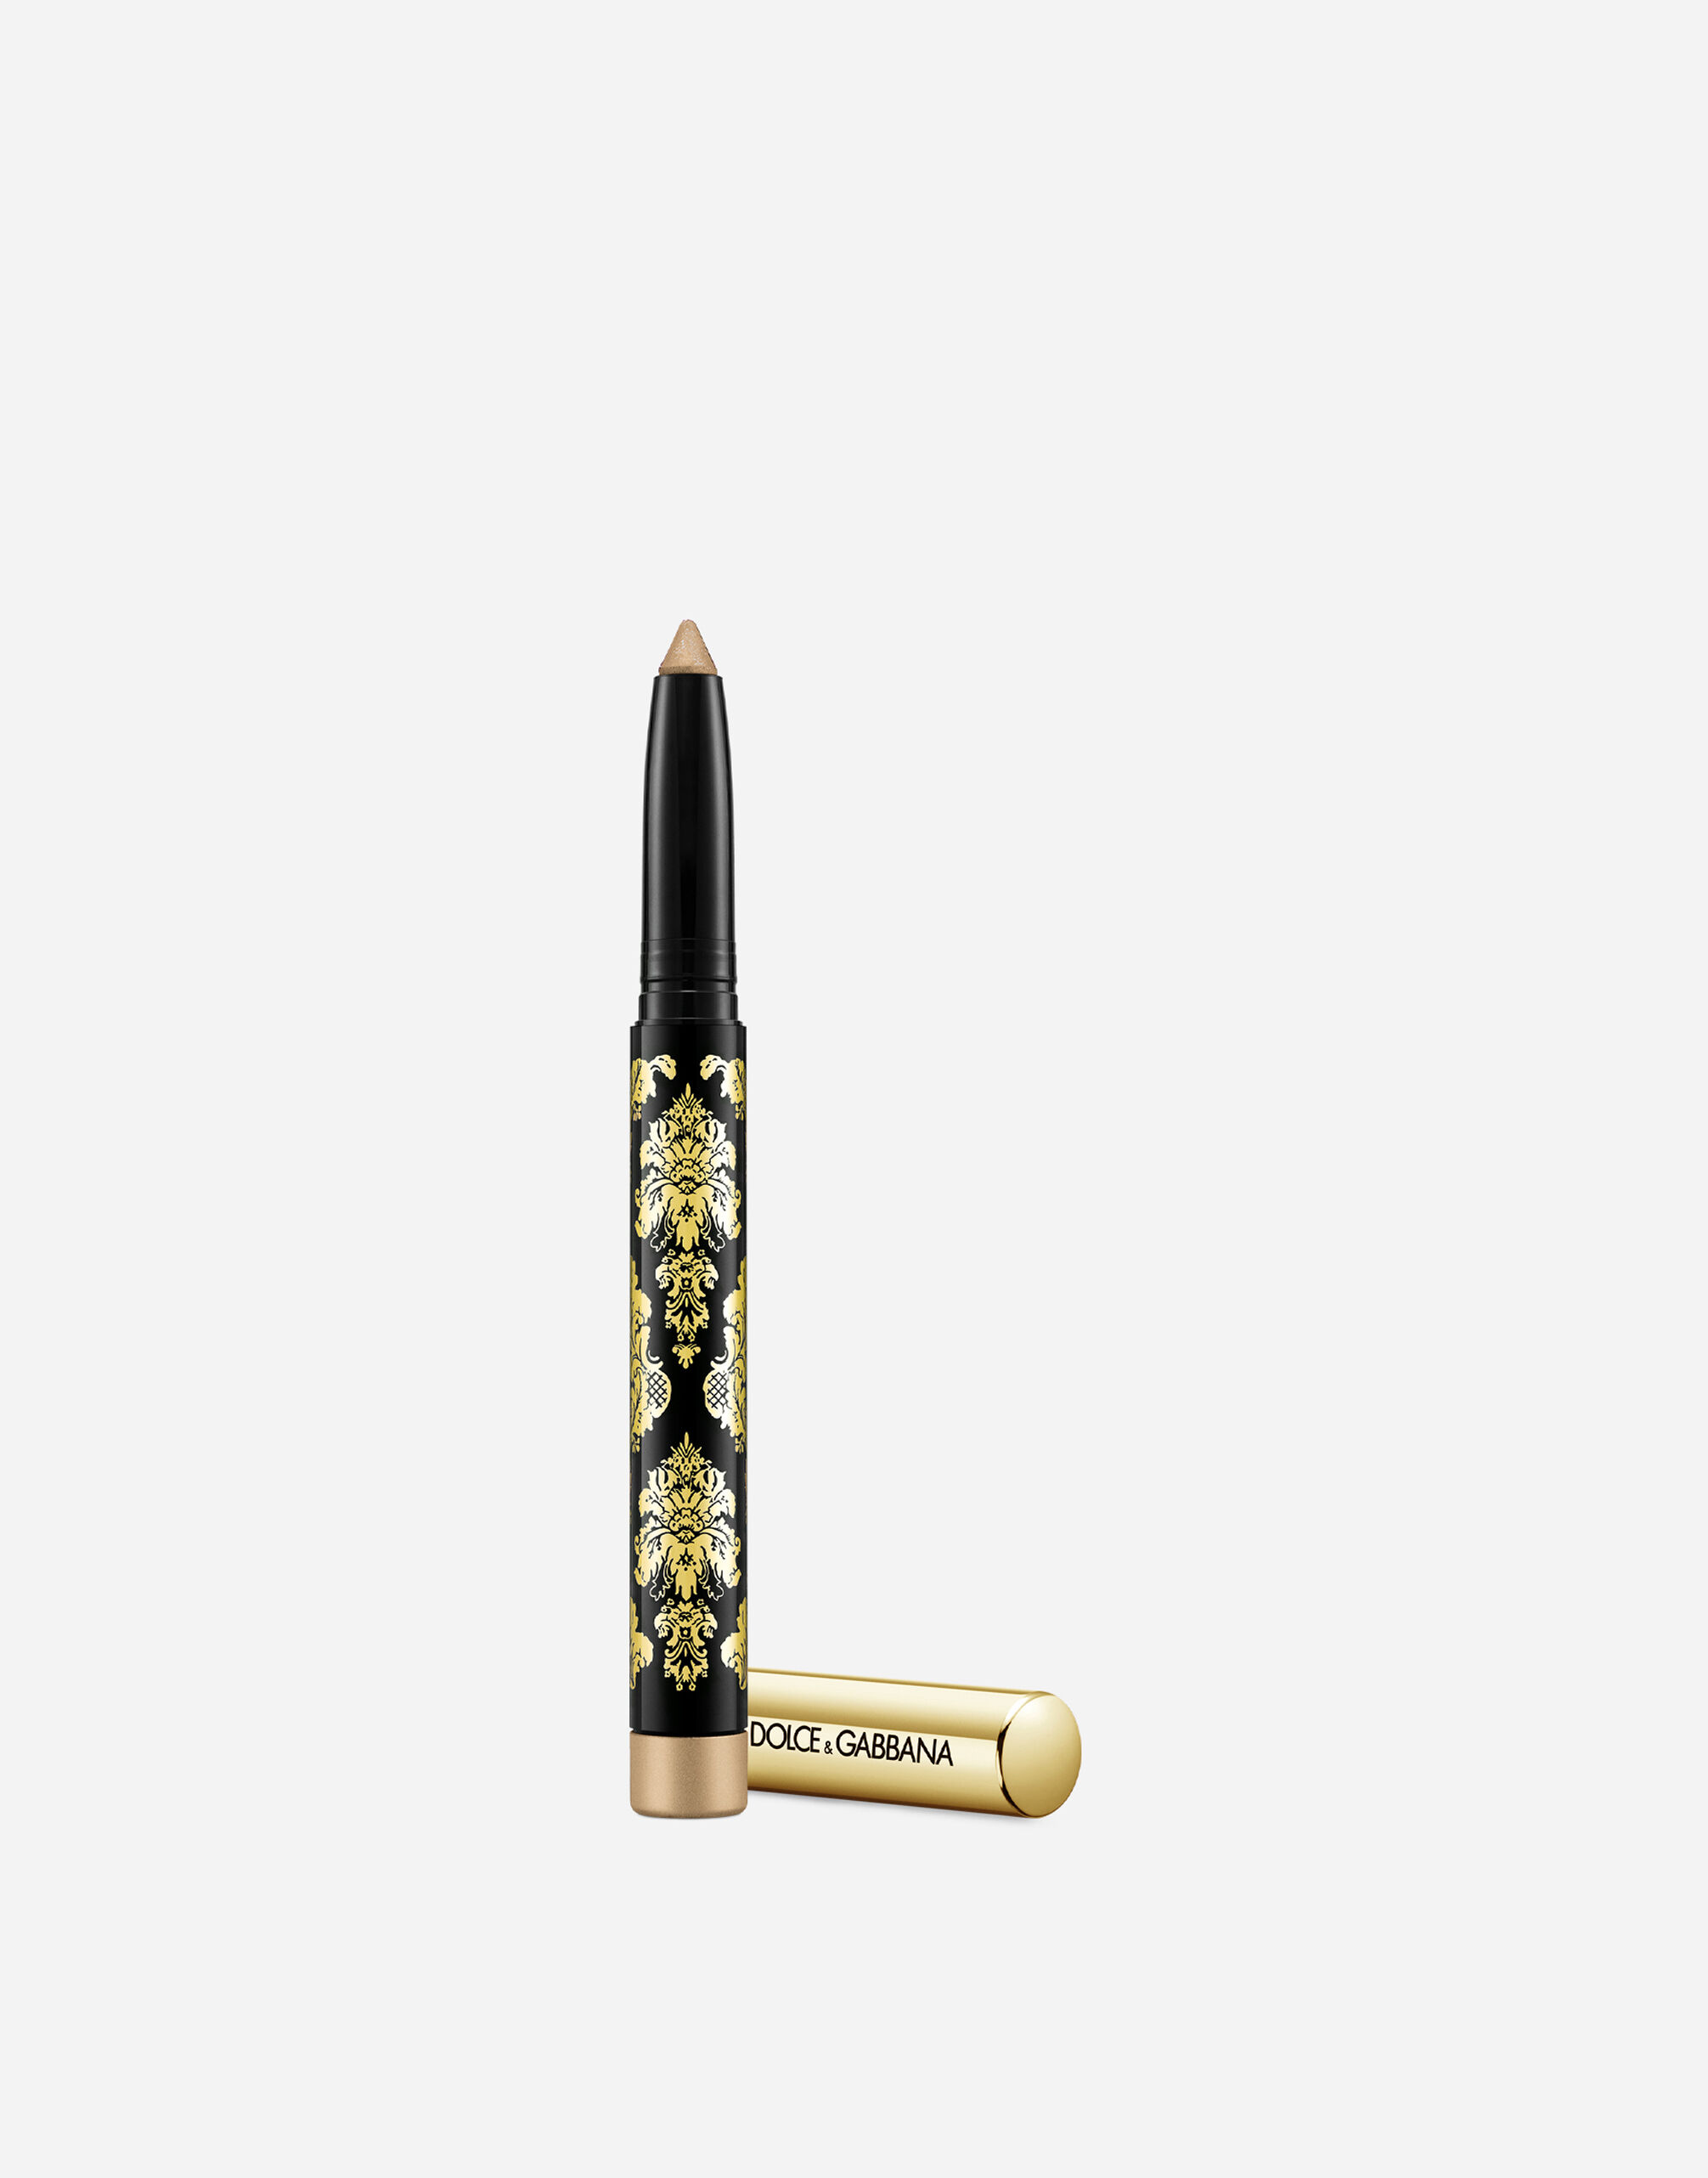 Тени-карандаш для глаз Dolce & Gabbana Intenseyes кремовые, №5 Taupe, 1,4 г rimmel тени карандаш magnif eyes 2 в 1